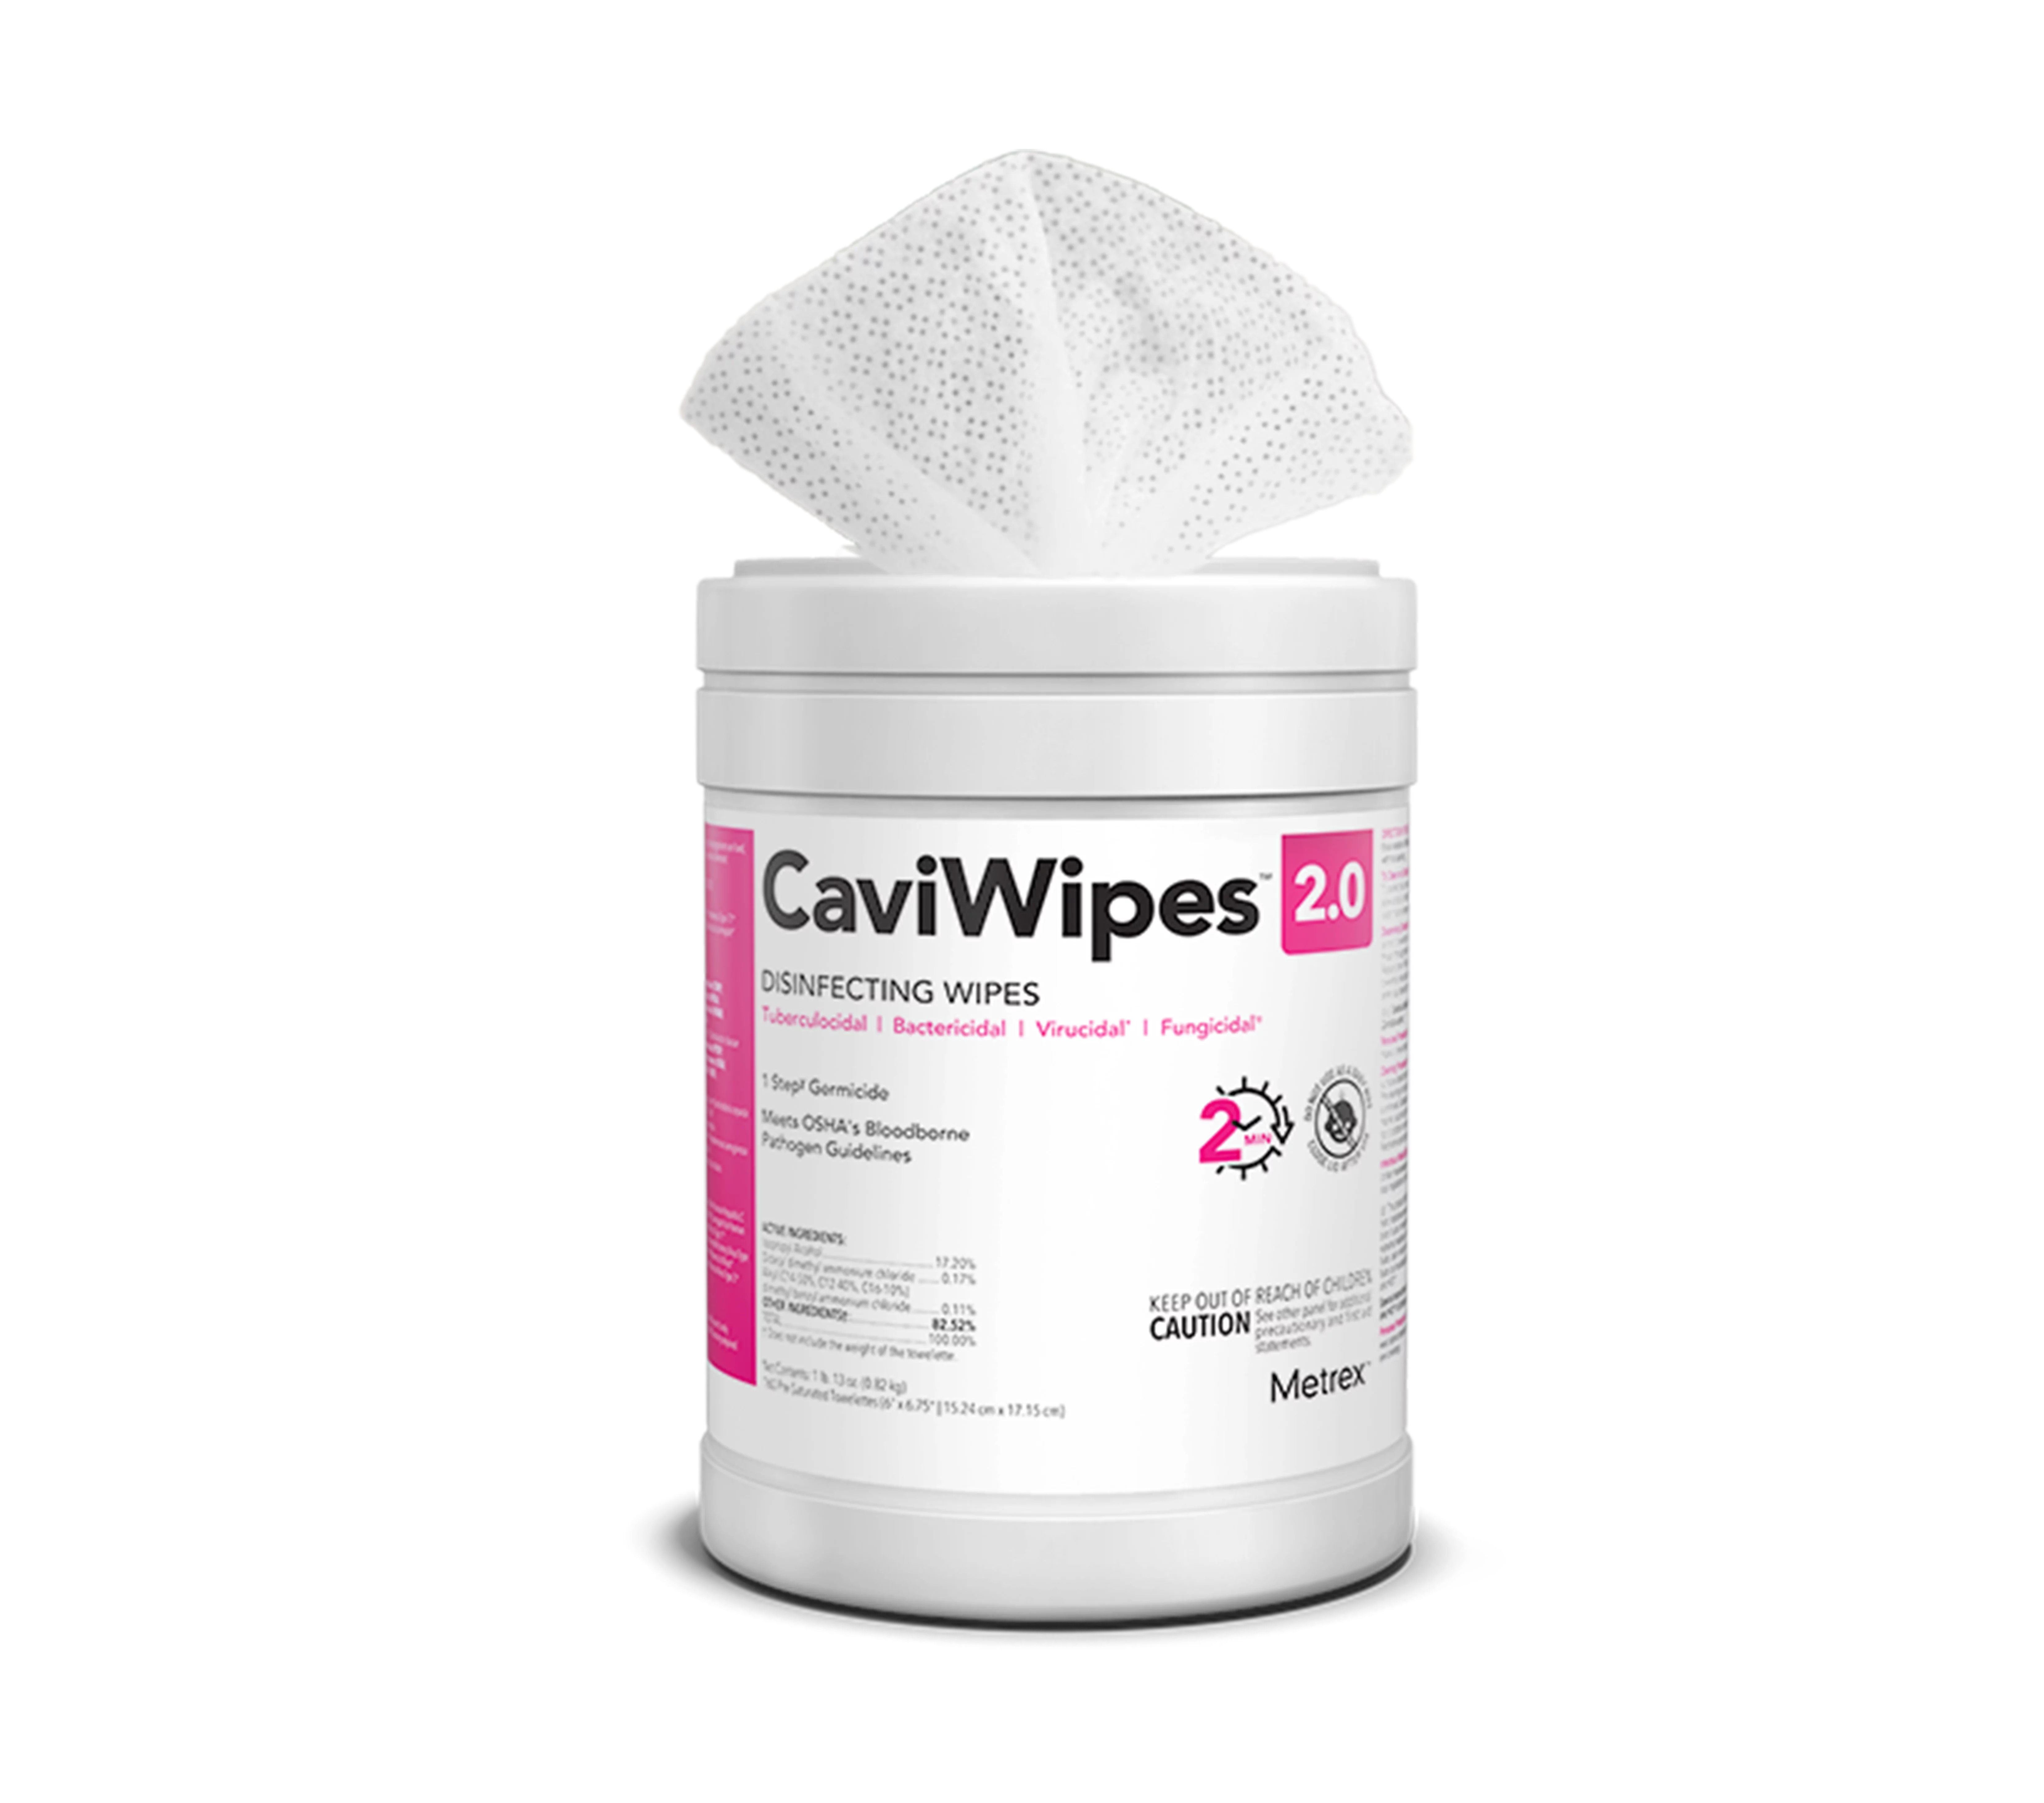 CaviWipes™ 2.0